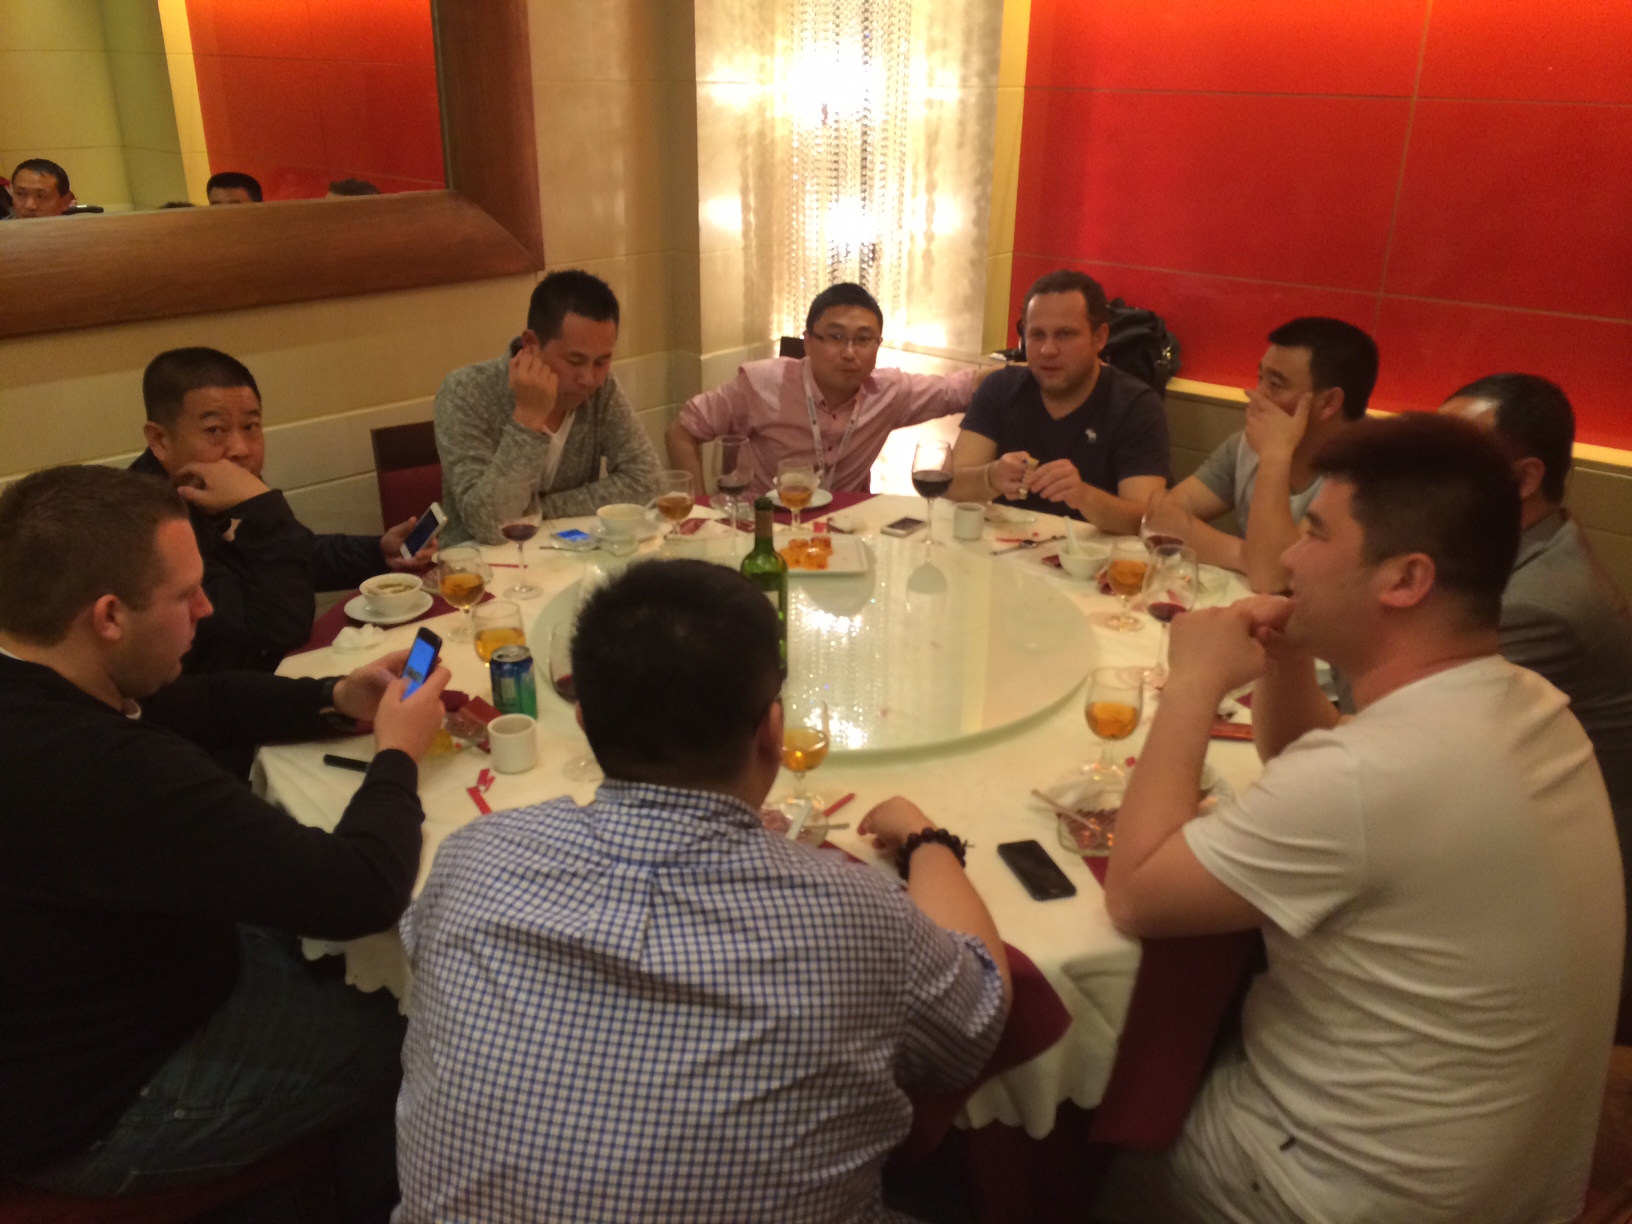 NW_team_dinner_at_HKG_fair_April_2014.JPG